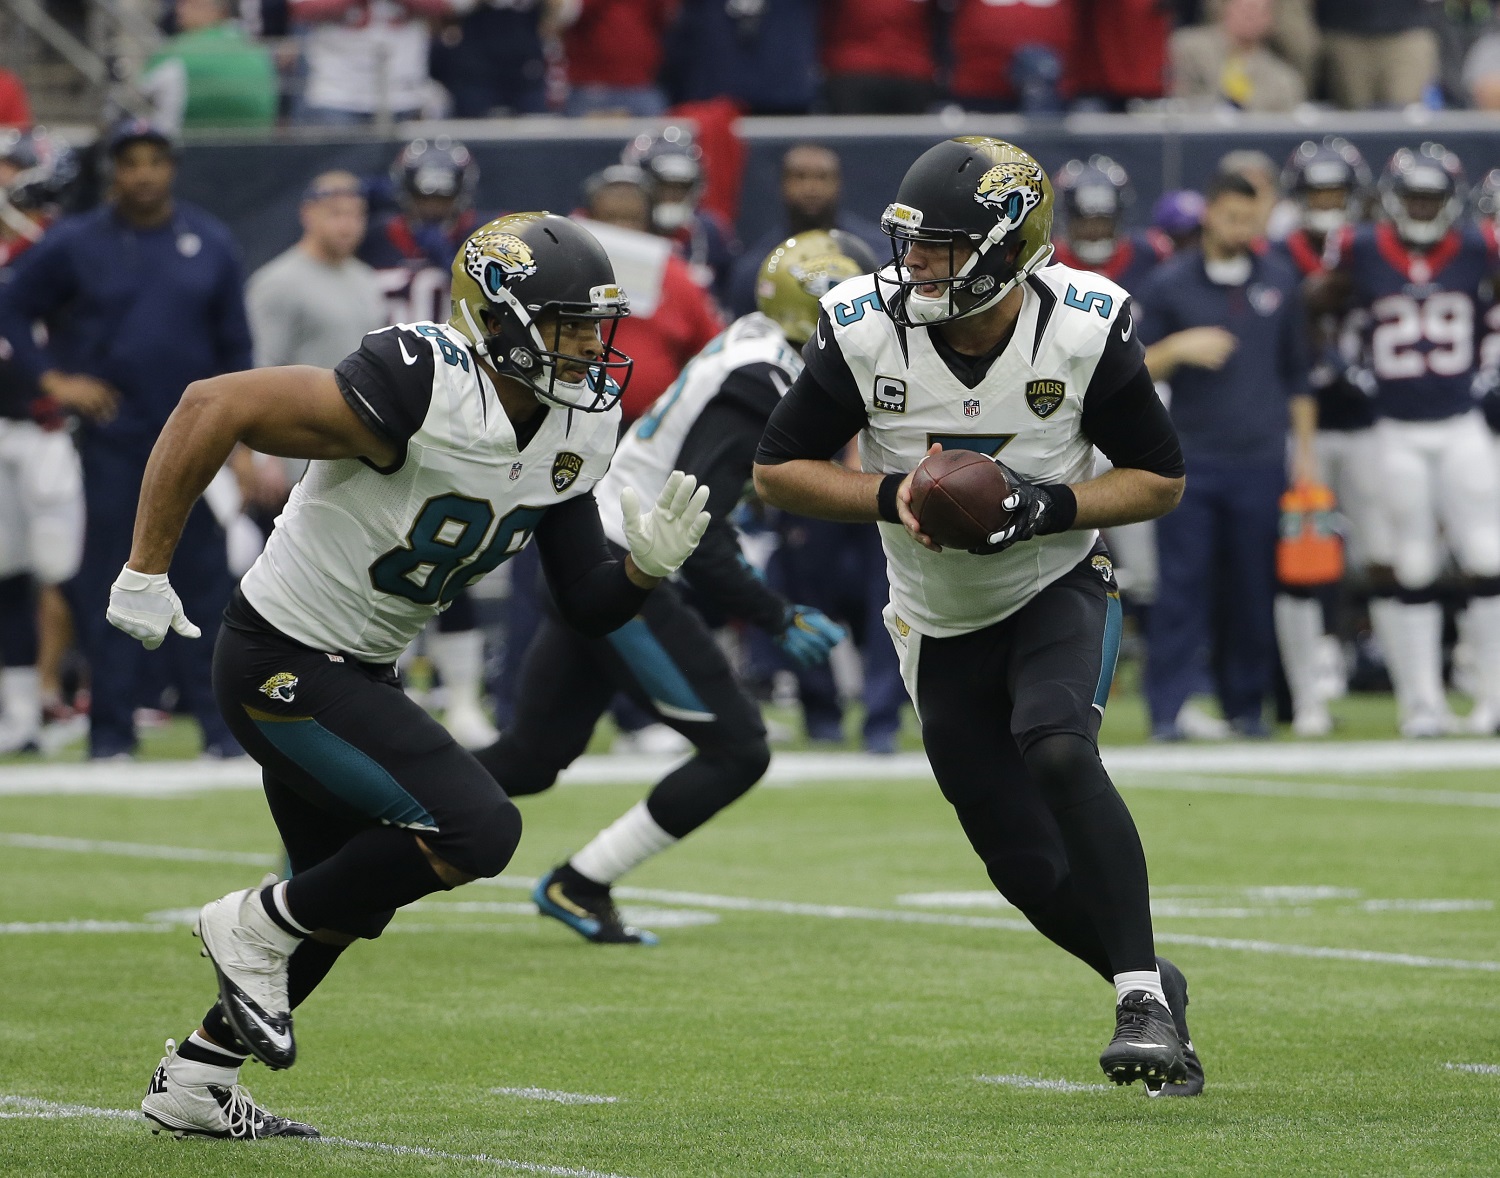 Jacksonville Jaguars quarterback Blake Bortles (5) is shown during the first half an NFL football game Sunday, Jan. 3, 2016, in Houston. (AP Photo/David J. Phillip)